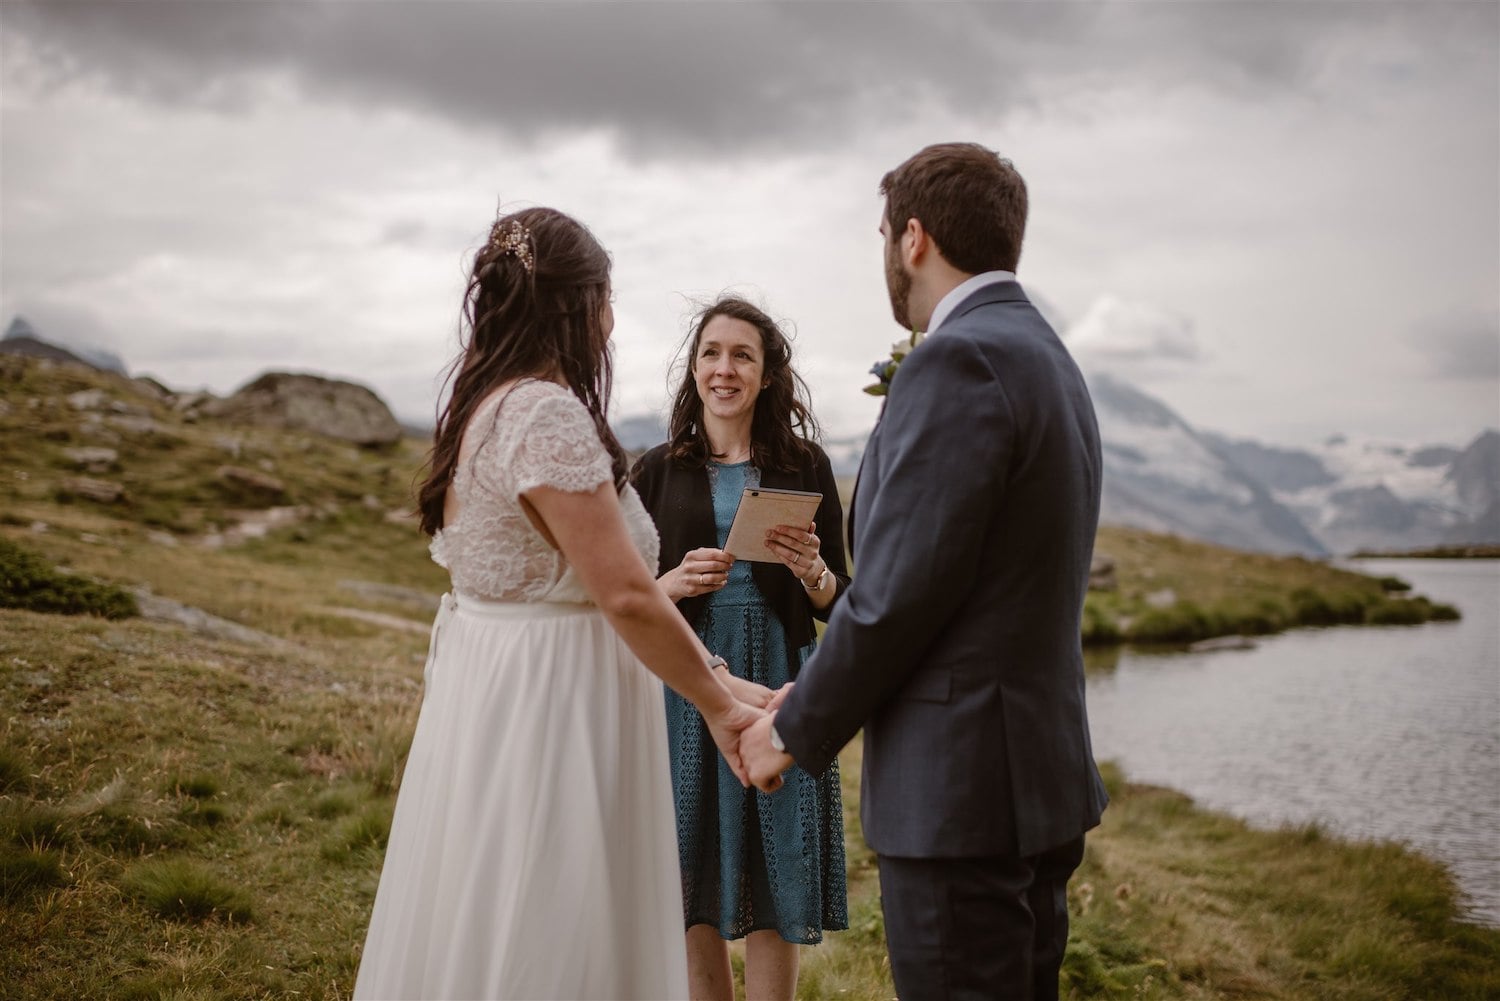 Summer elopement in Zermatt by Marylin Rebelo